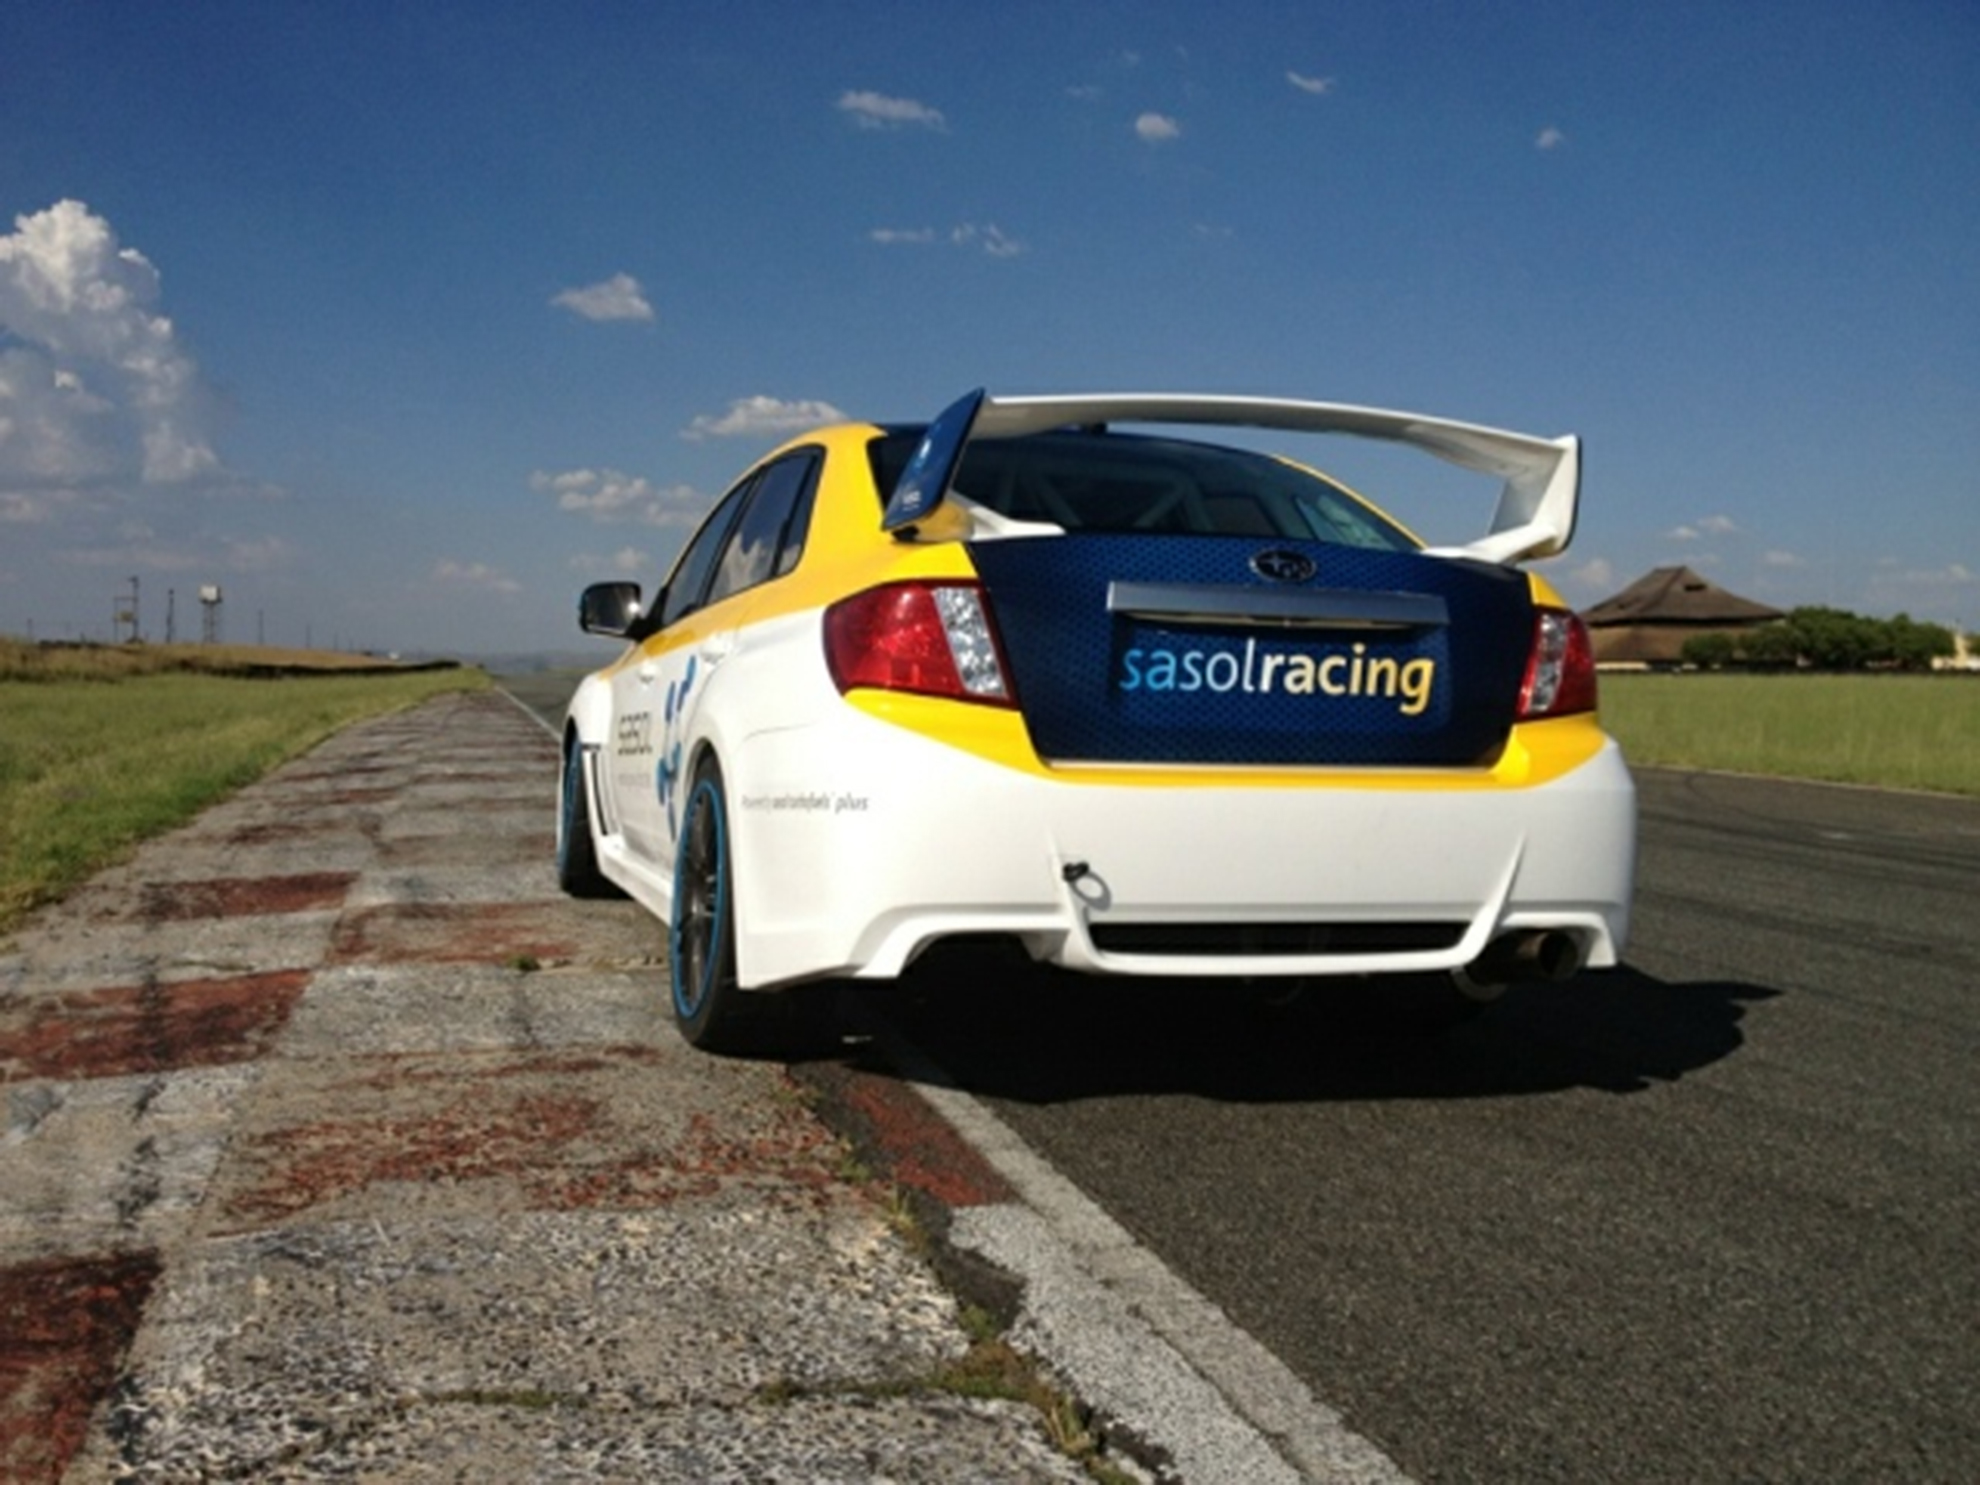 Subaru South Africa and Sasol Racing